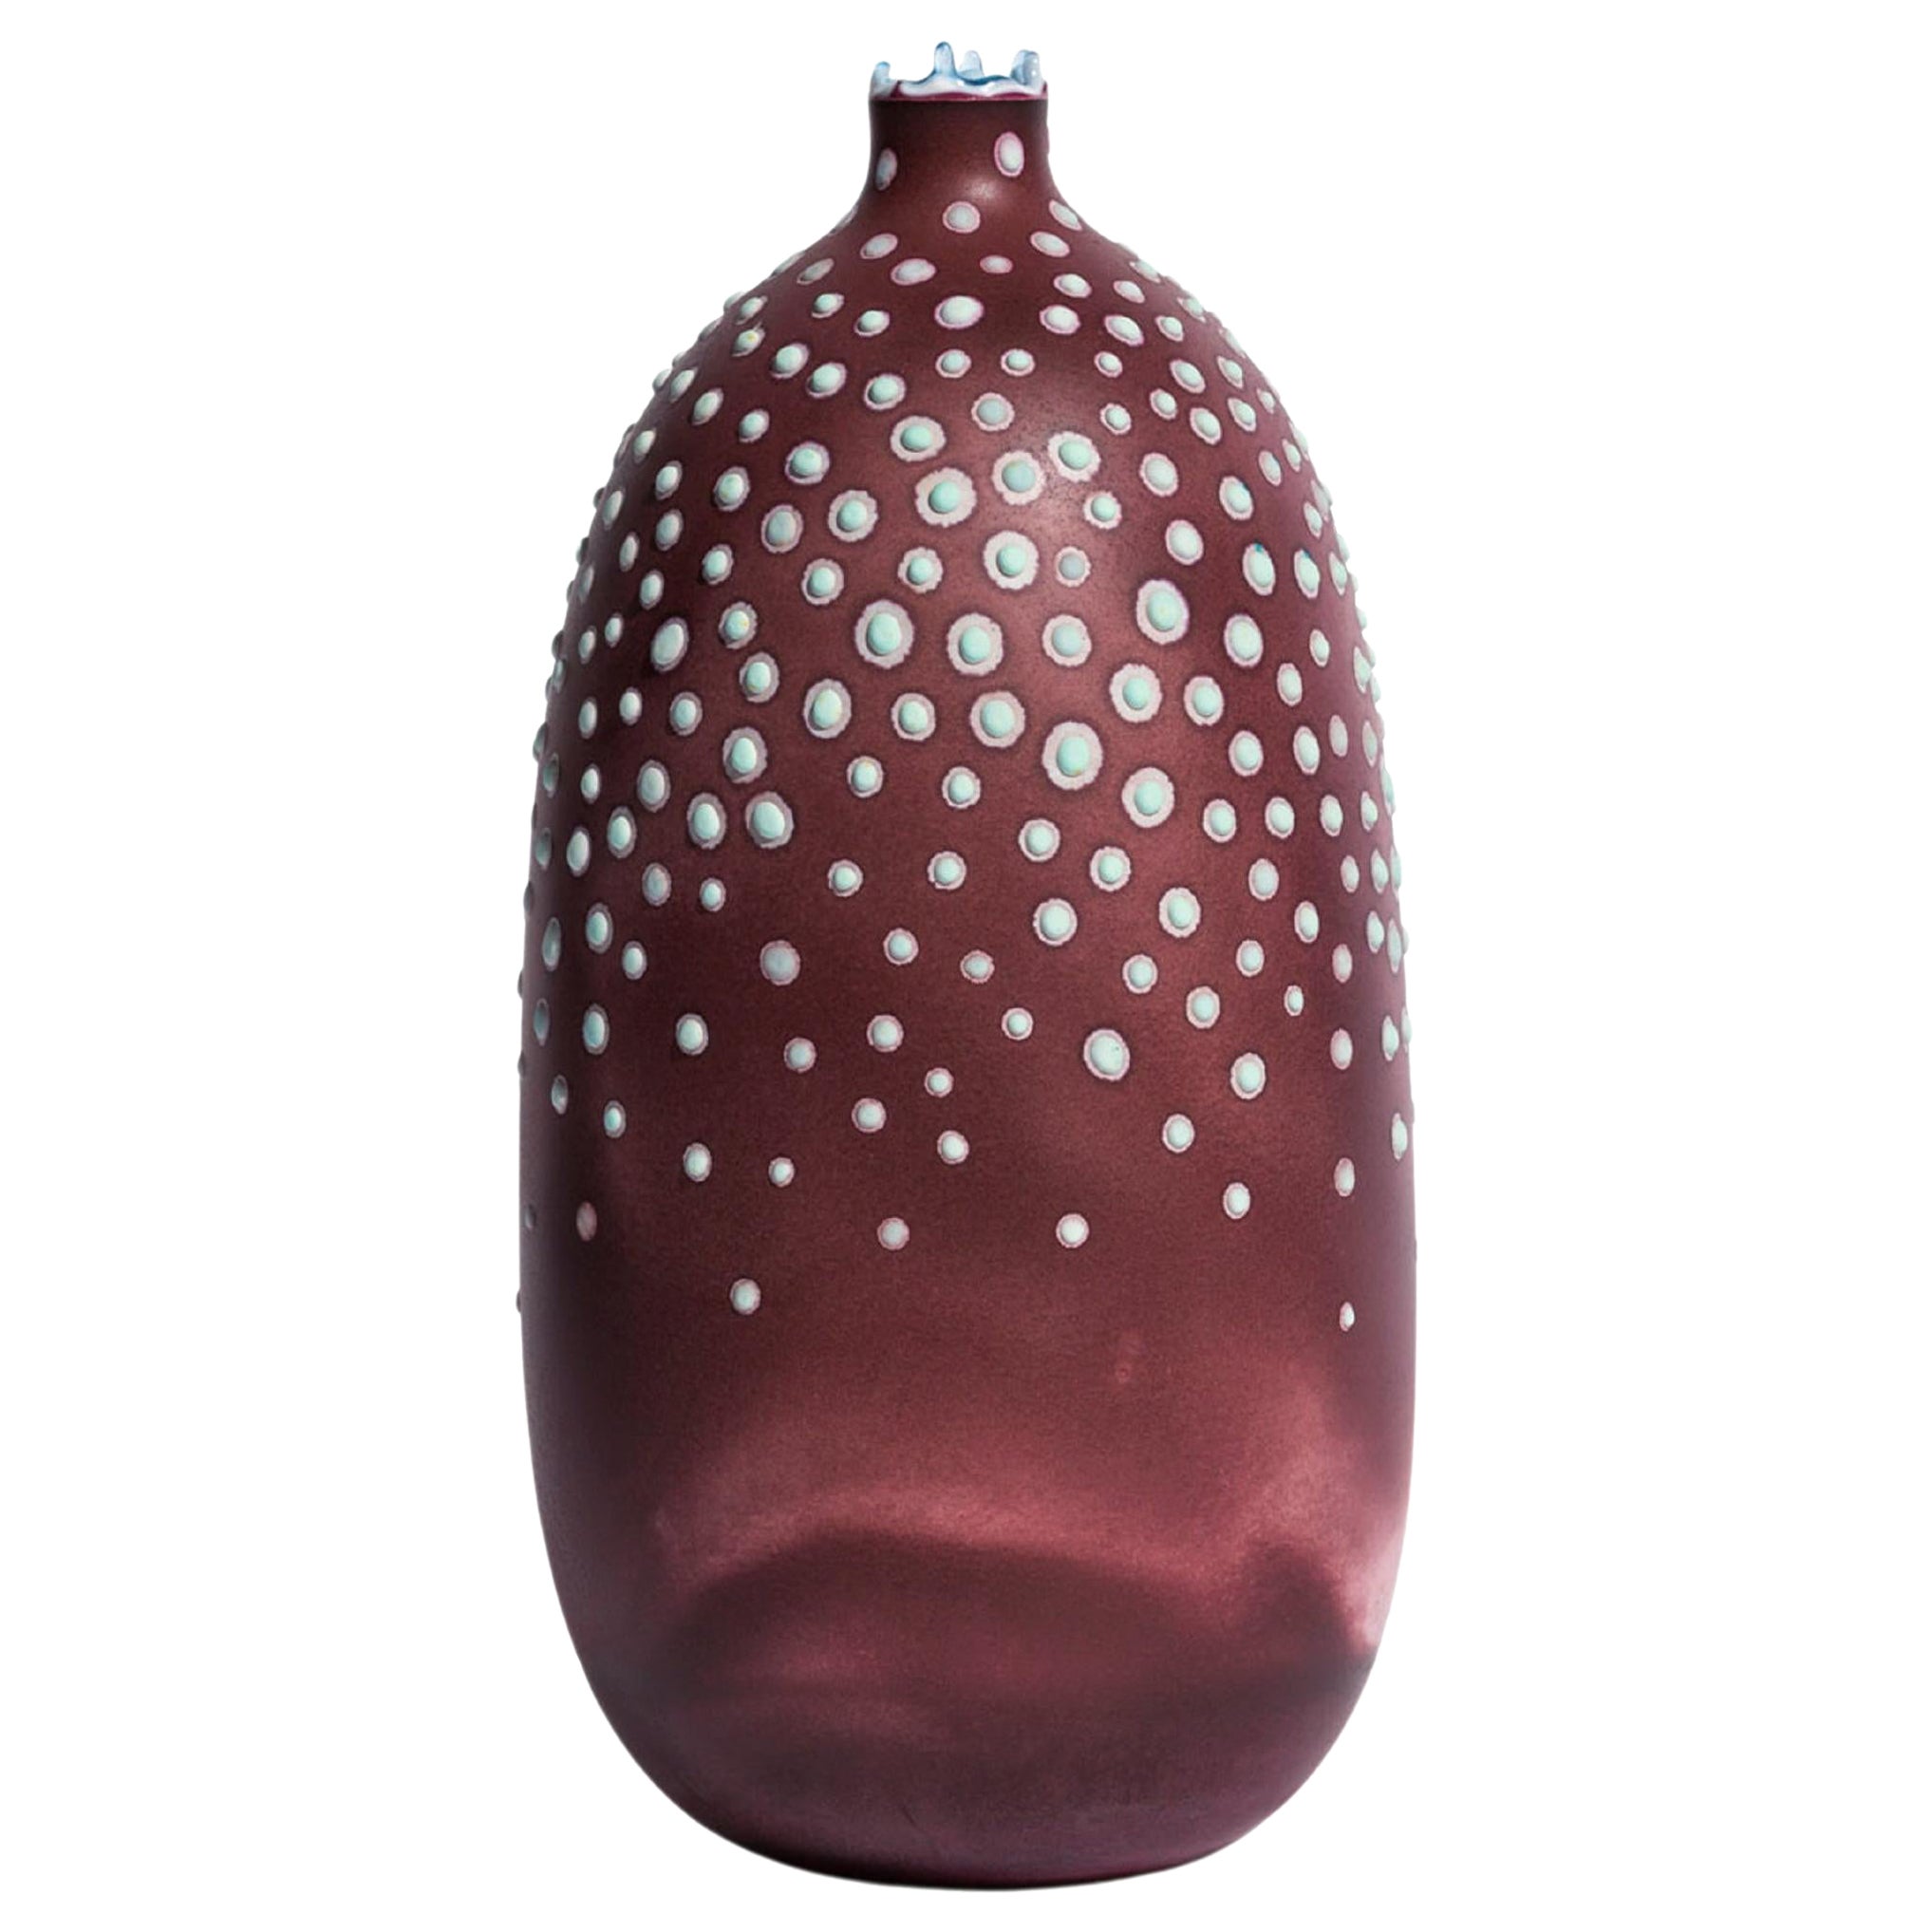 Oxblood Huxley Vase by Elyse Graham